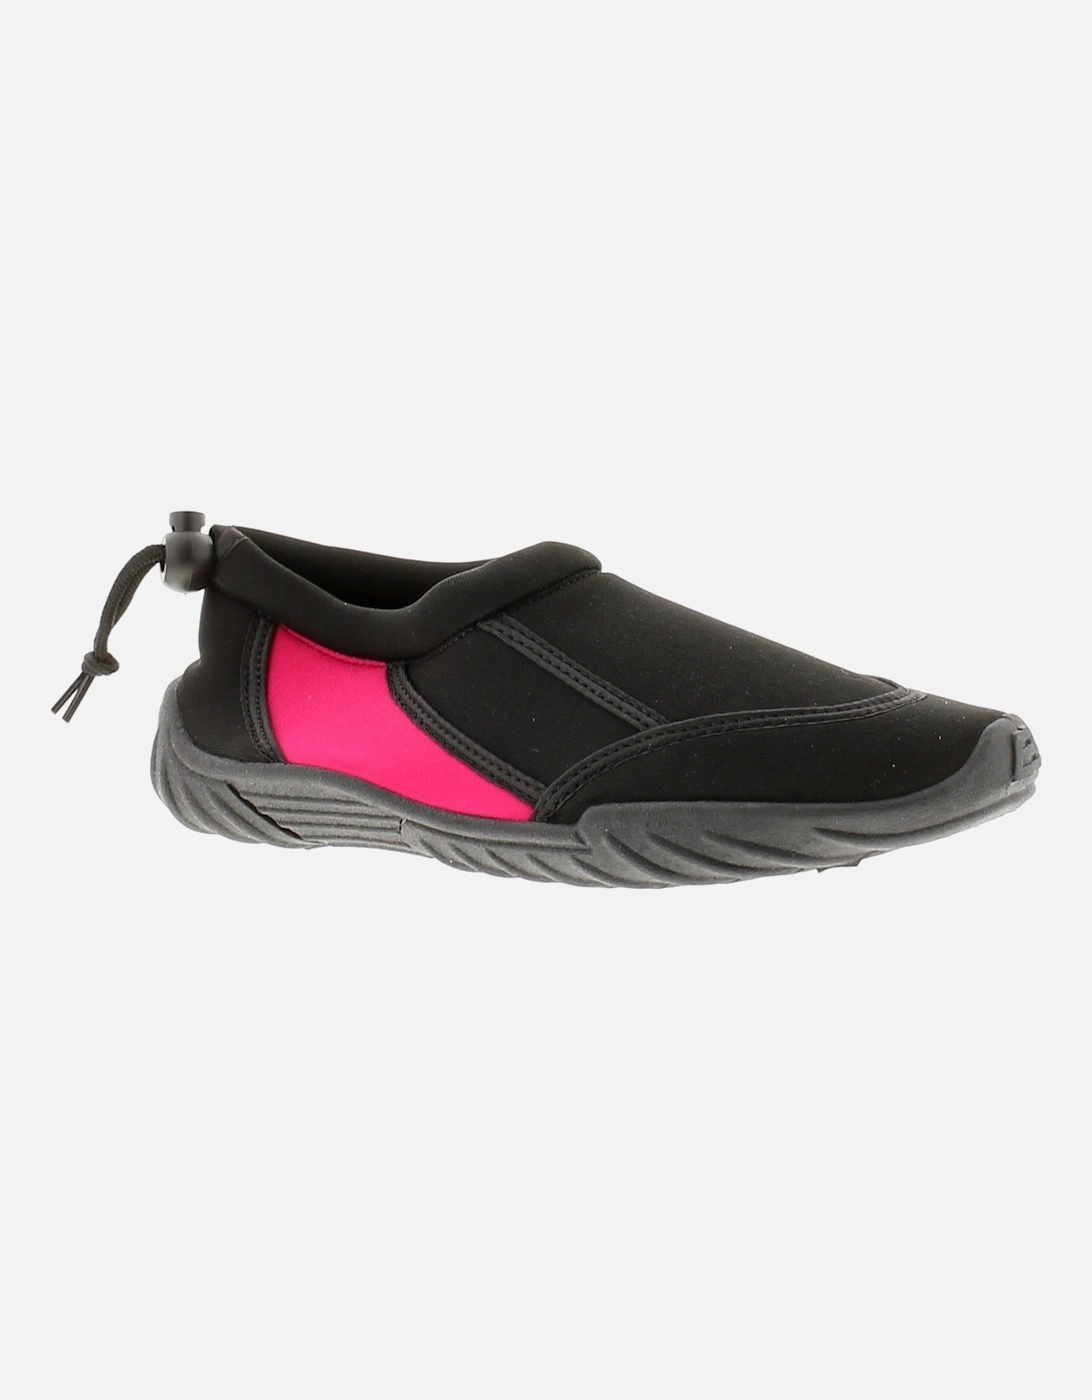 Womens Aqua Shoes Rockpool Slip On black pink UK Size, 6 of 5